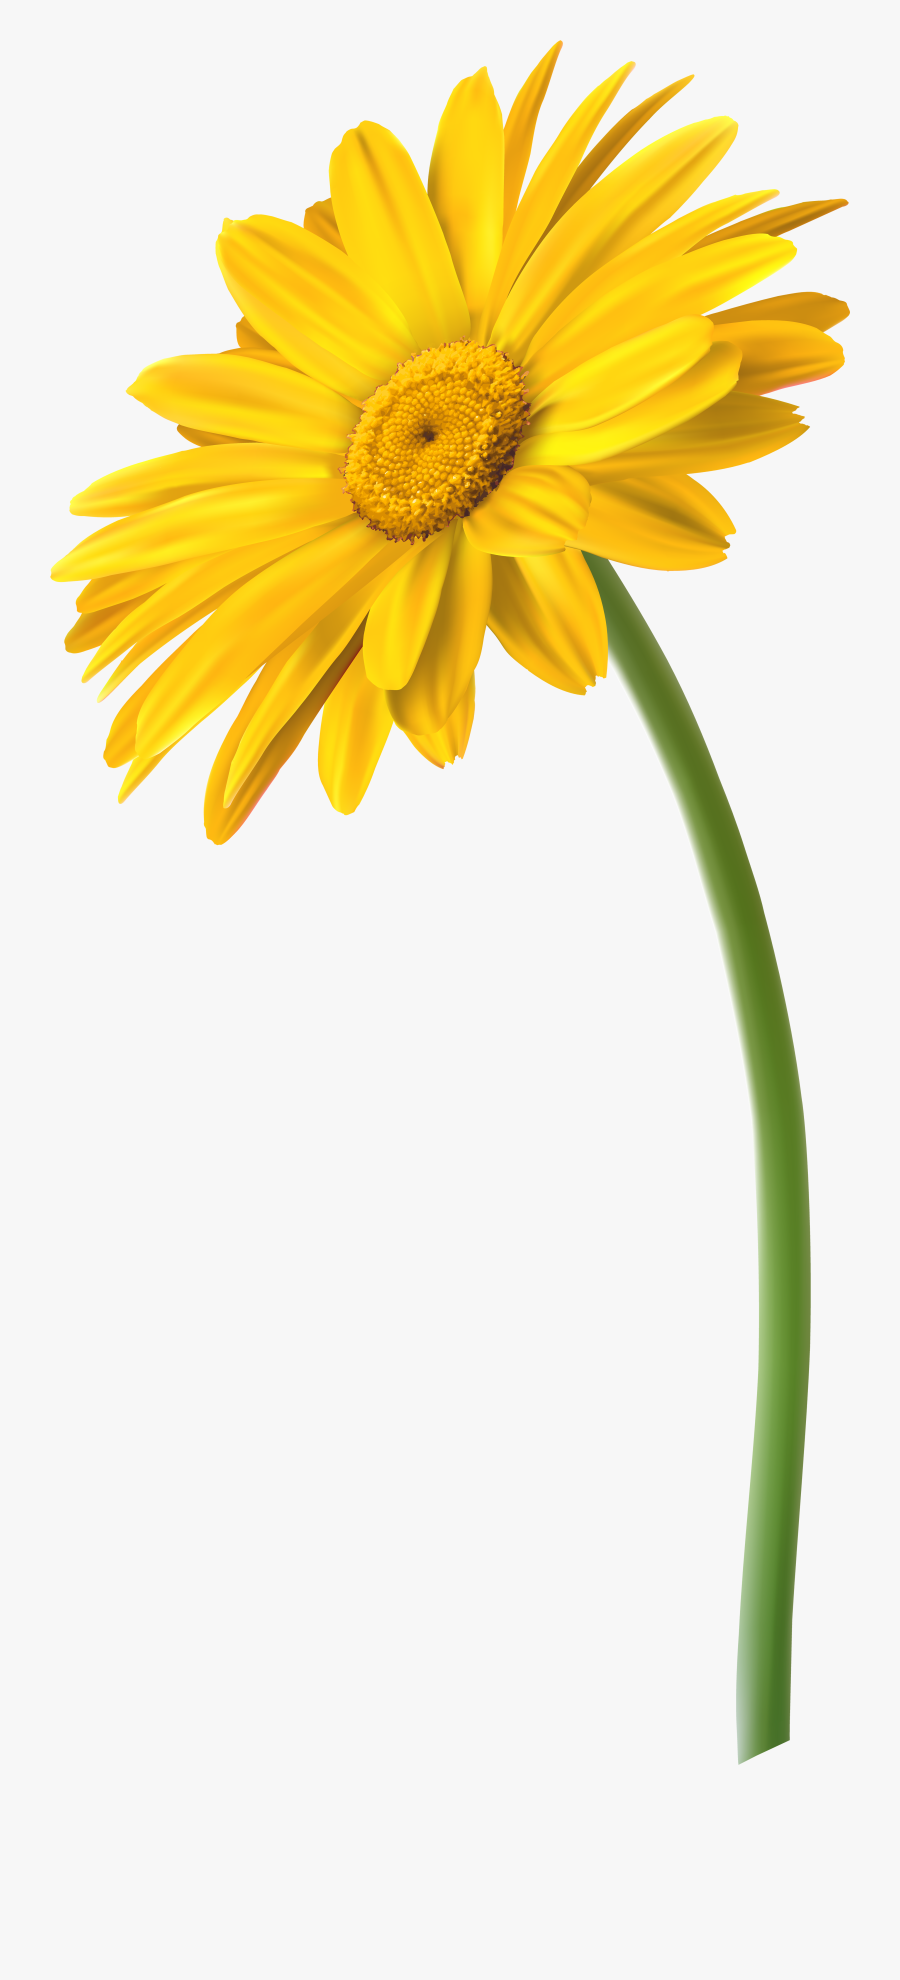 Yellow Gerbera Flower Png Clip Art Image, Transparent Clipart